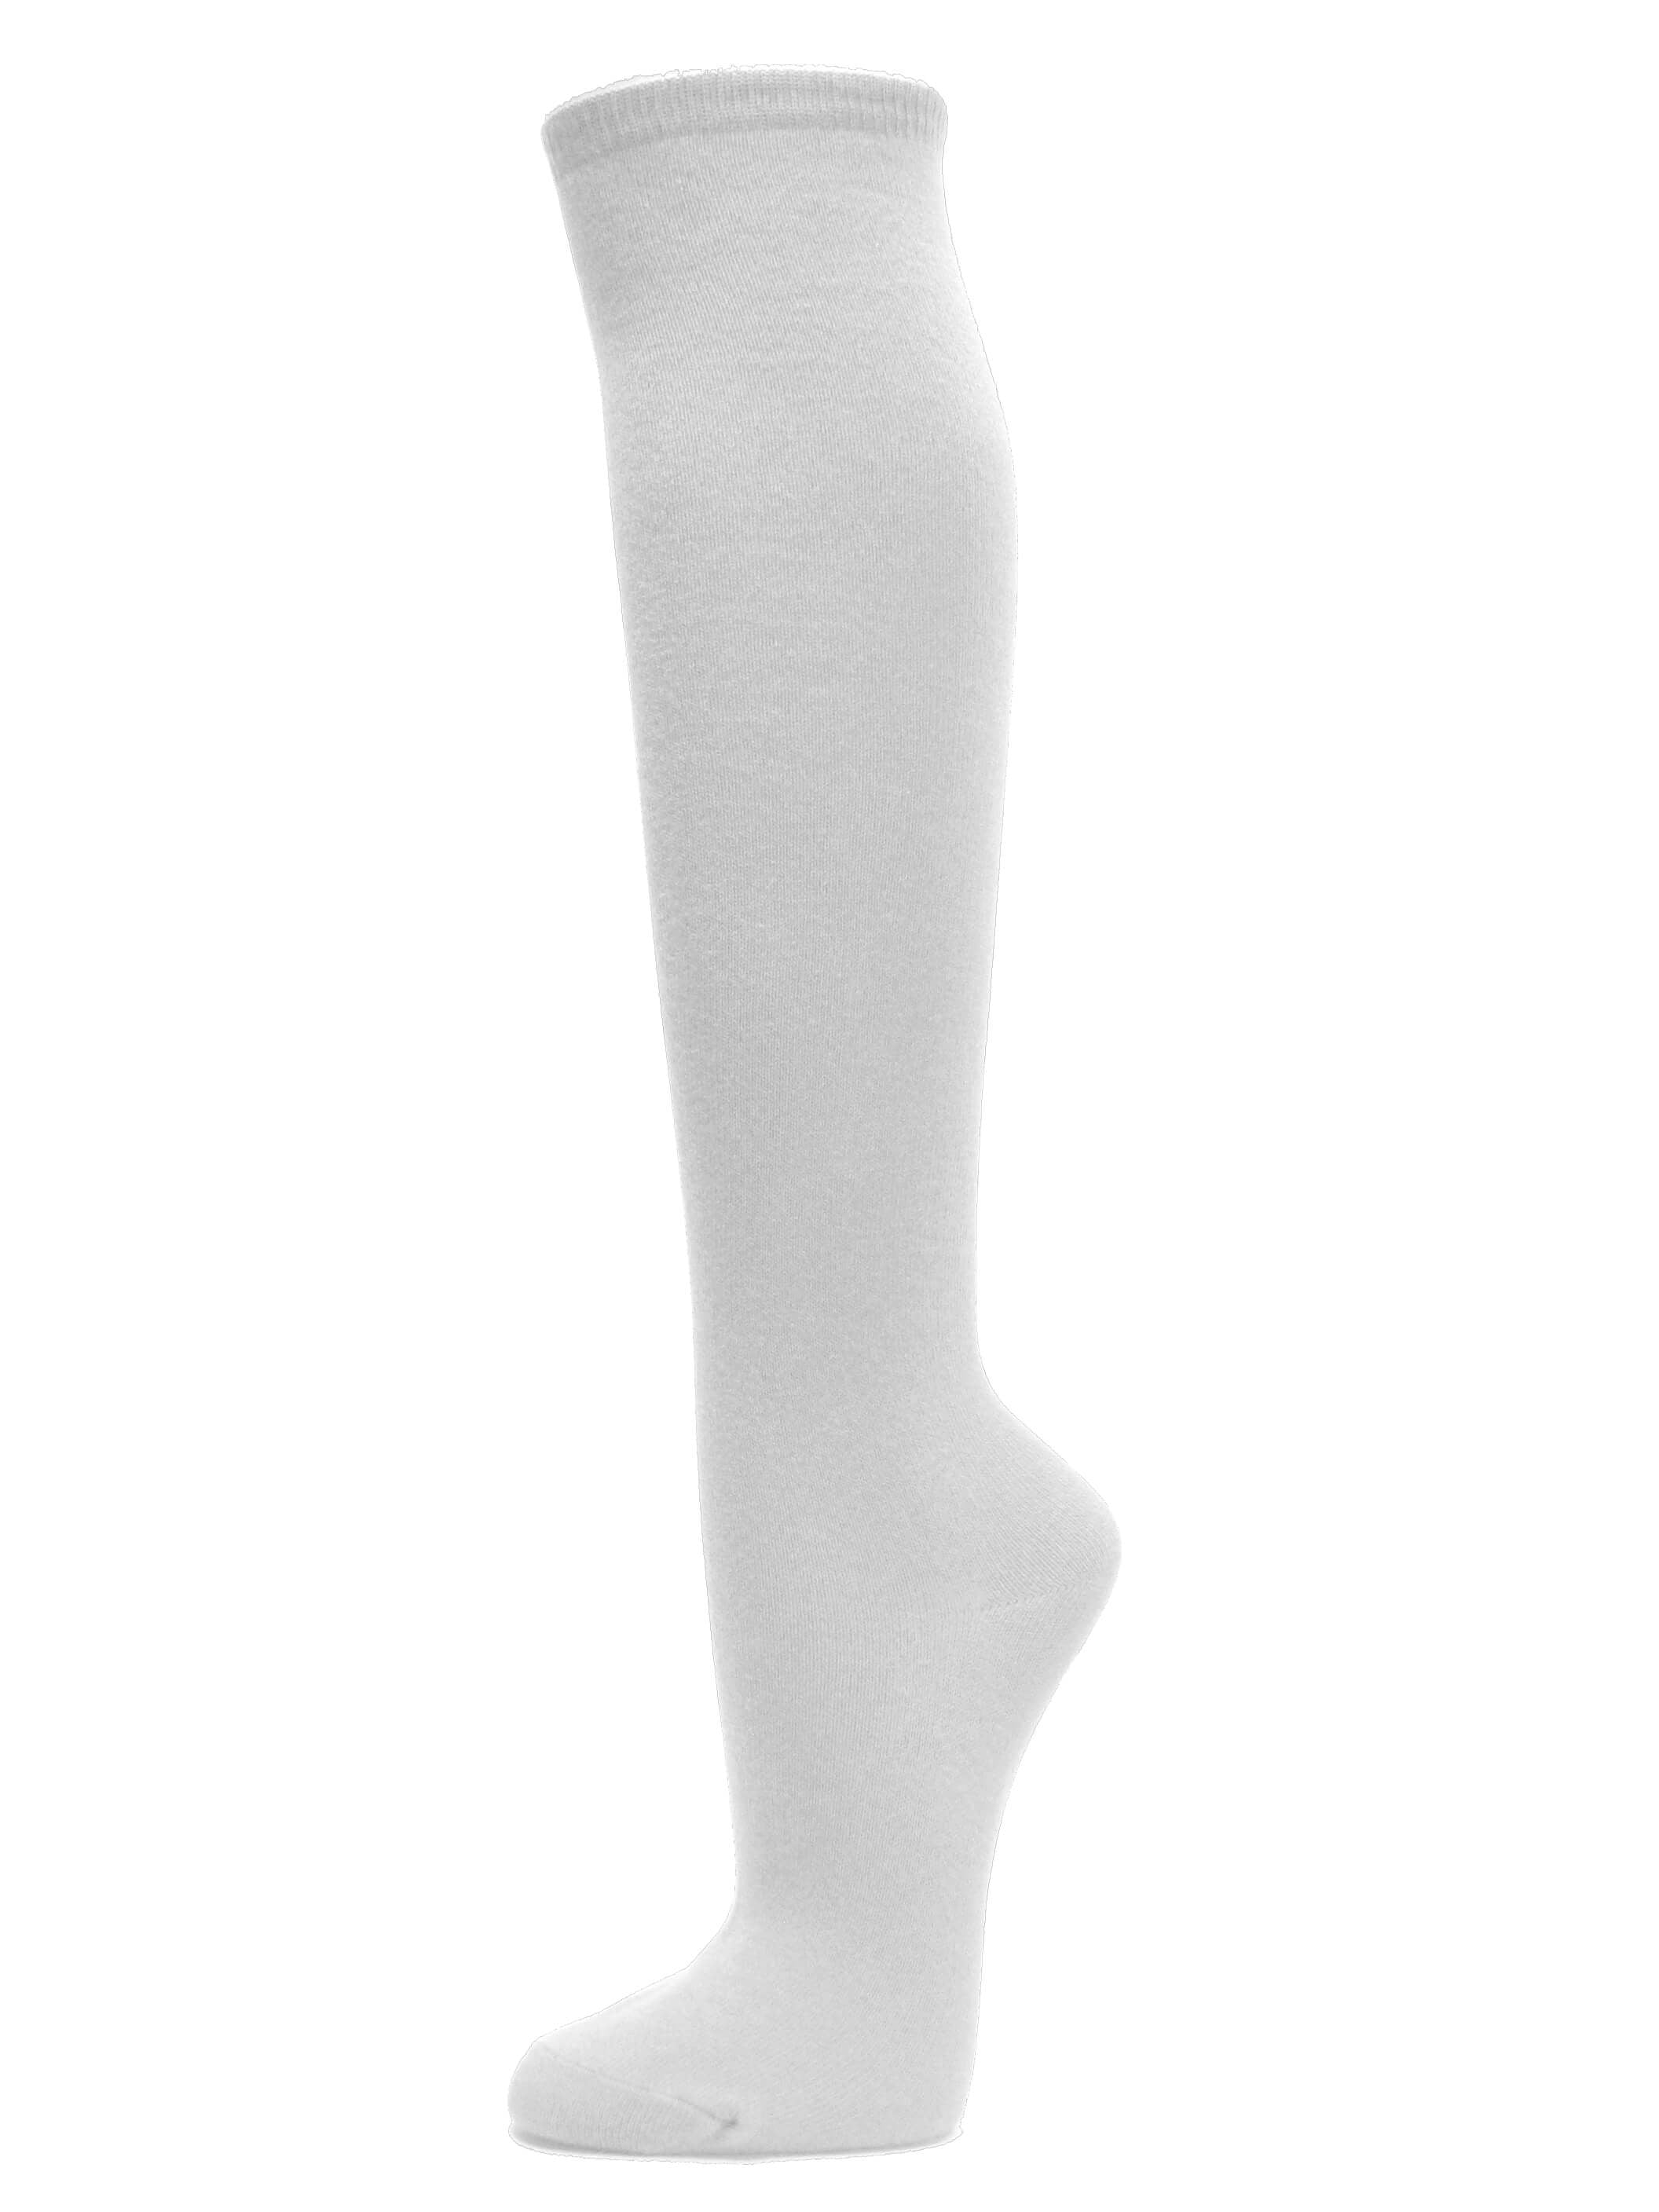 Couver Cotton Plain Fashion Casual Ladies / Girls Cute Knee High Socks ...